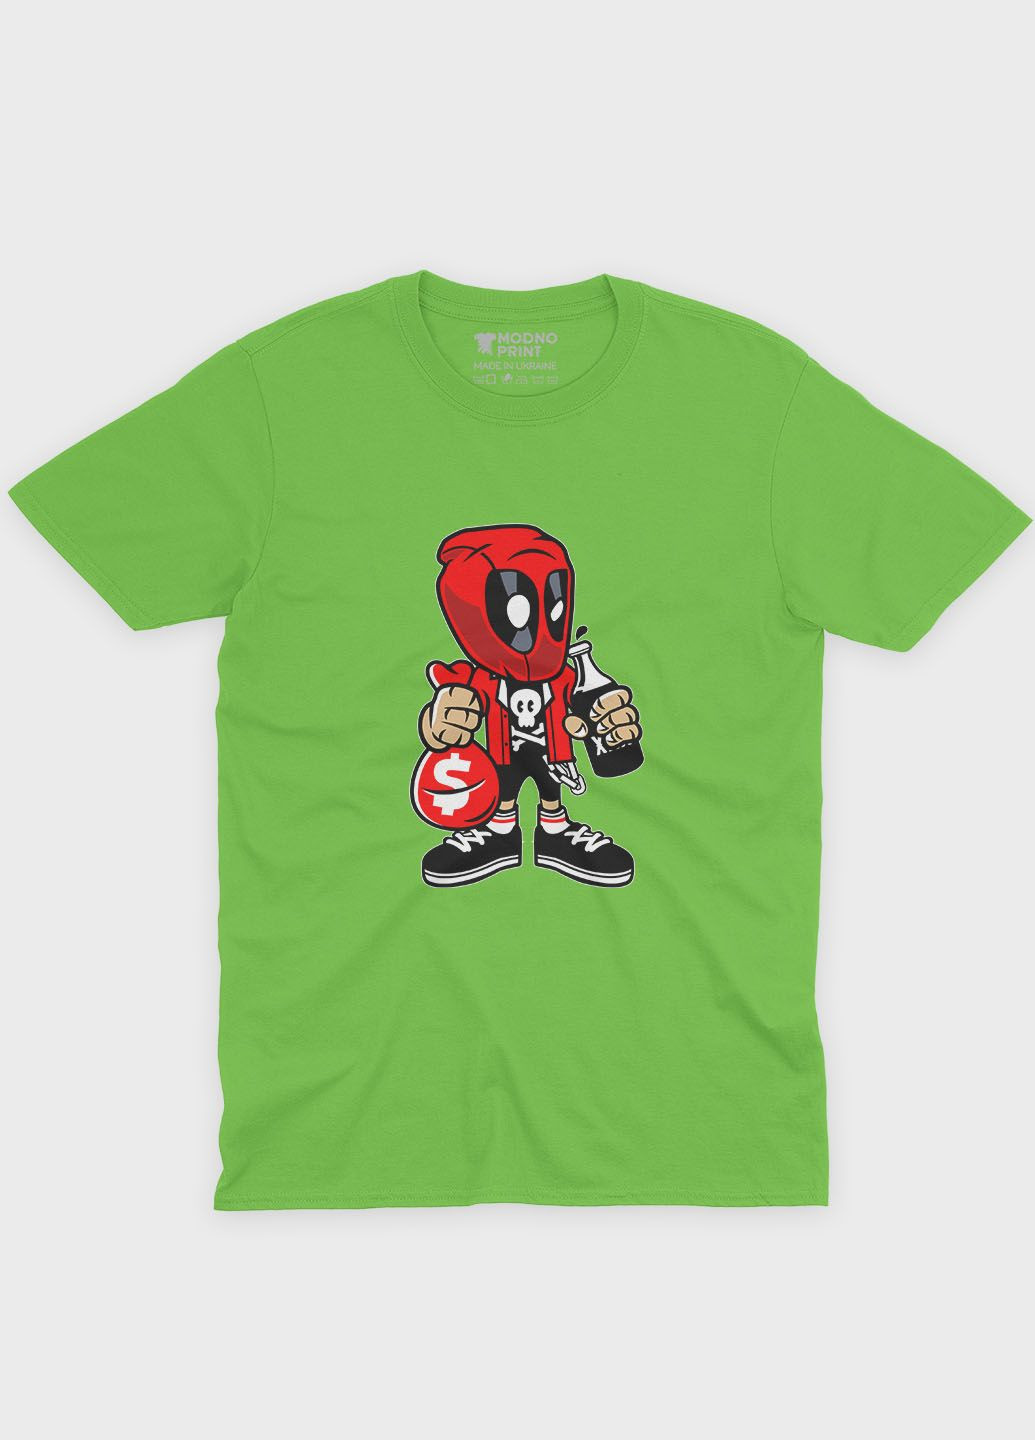 Салатовая демисезонная футболка для мальчика с принтом антигероя - дедпул (ts001-1-kiw-006-015-015-b) Modno